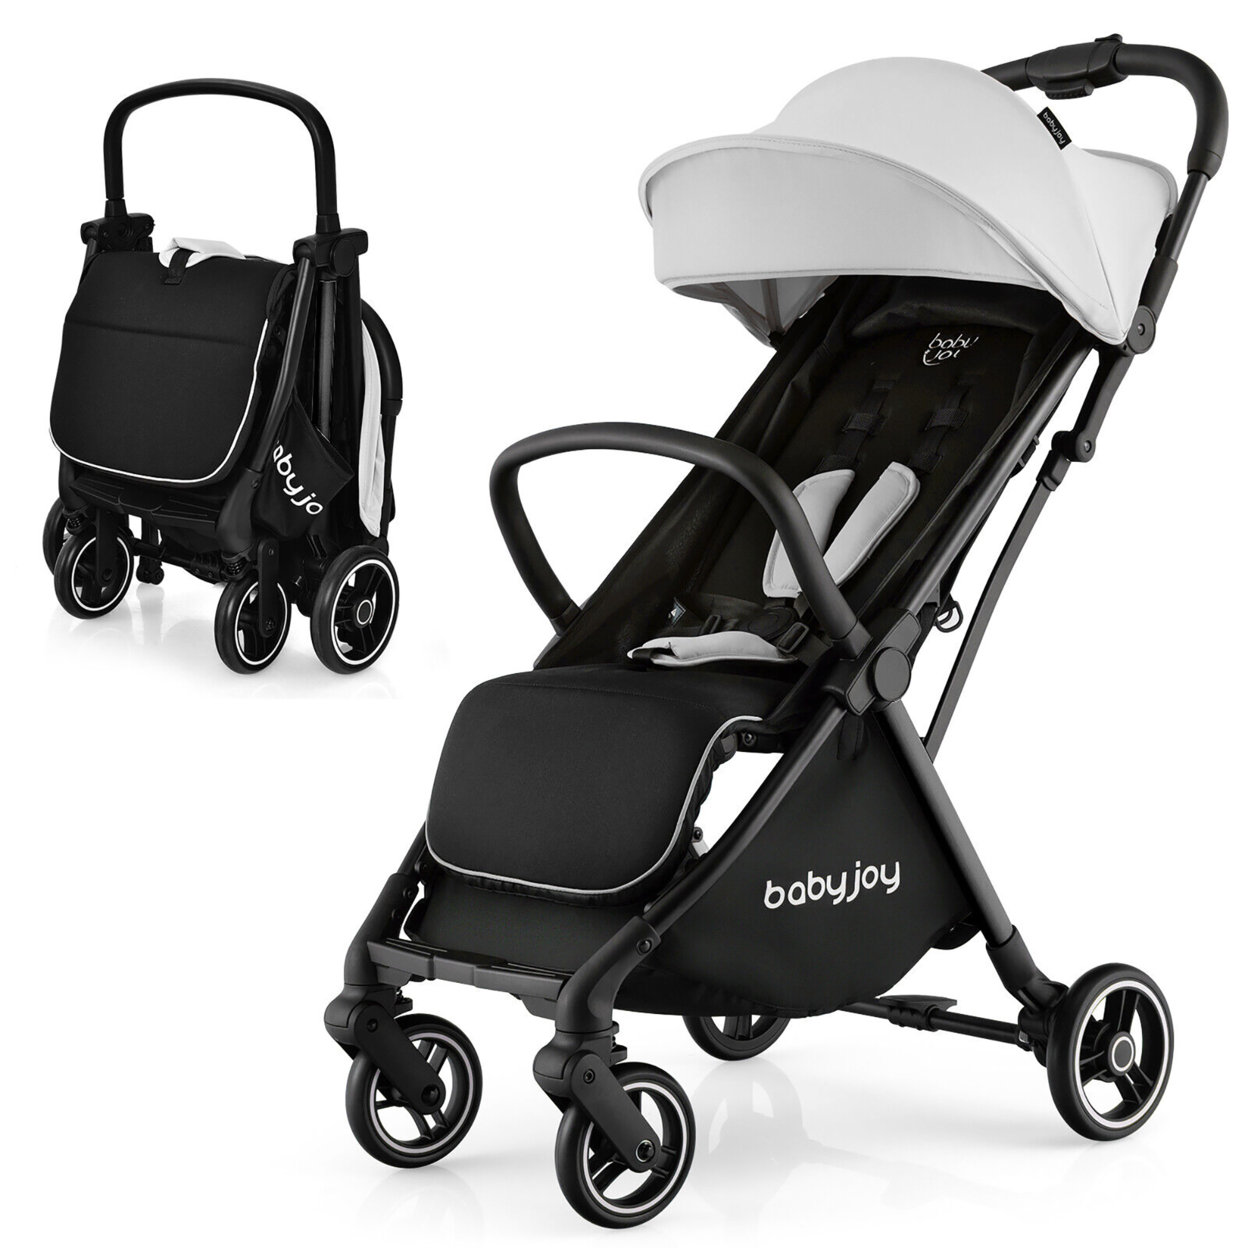 Portable Baby Stroller One-Hand Fold Pushchair W/ Aluminum Frame - Grey